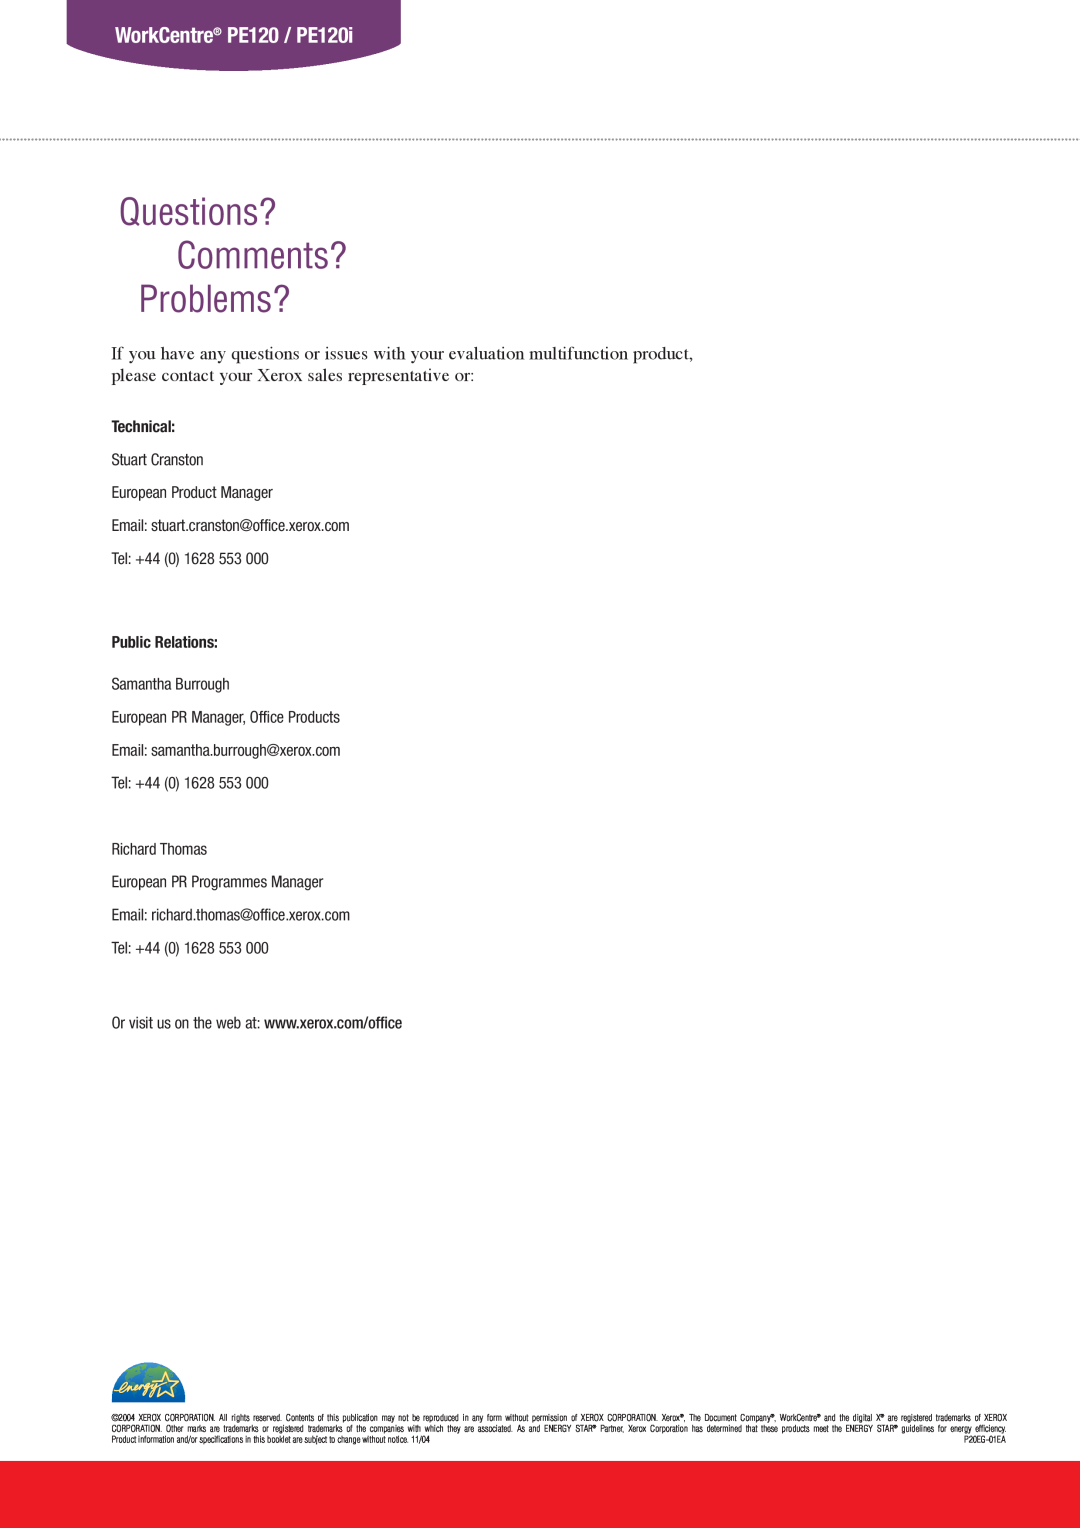 Xerox Questions? Comments? Problems?, WorkCentre PE120 / PE120i, Technical, Stuart Cranston European Product Manager 